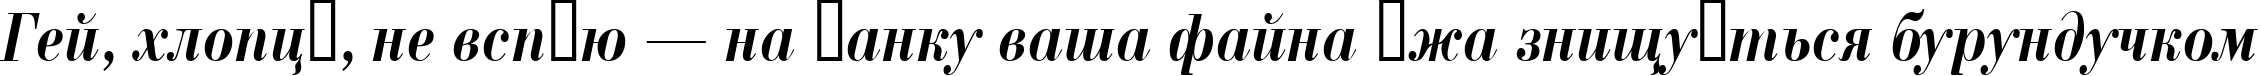 Пример написания шрифтом a_BodoniNovaNr BoldItalic текста на украинском